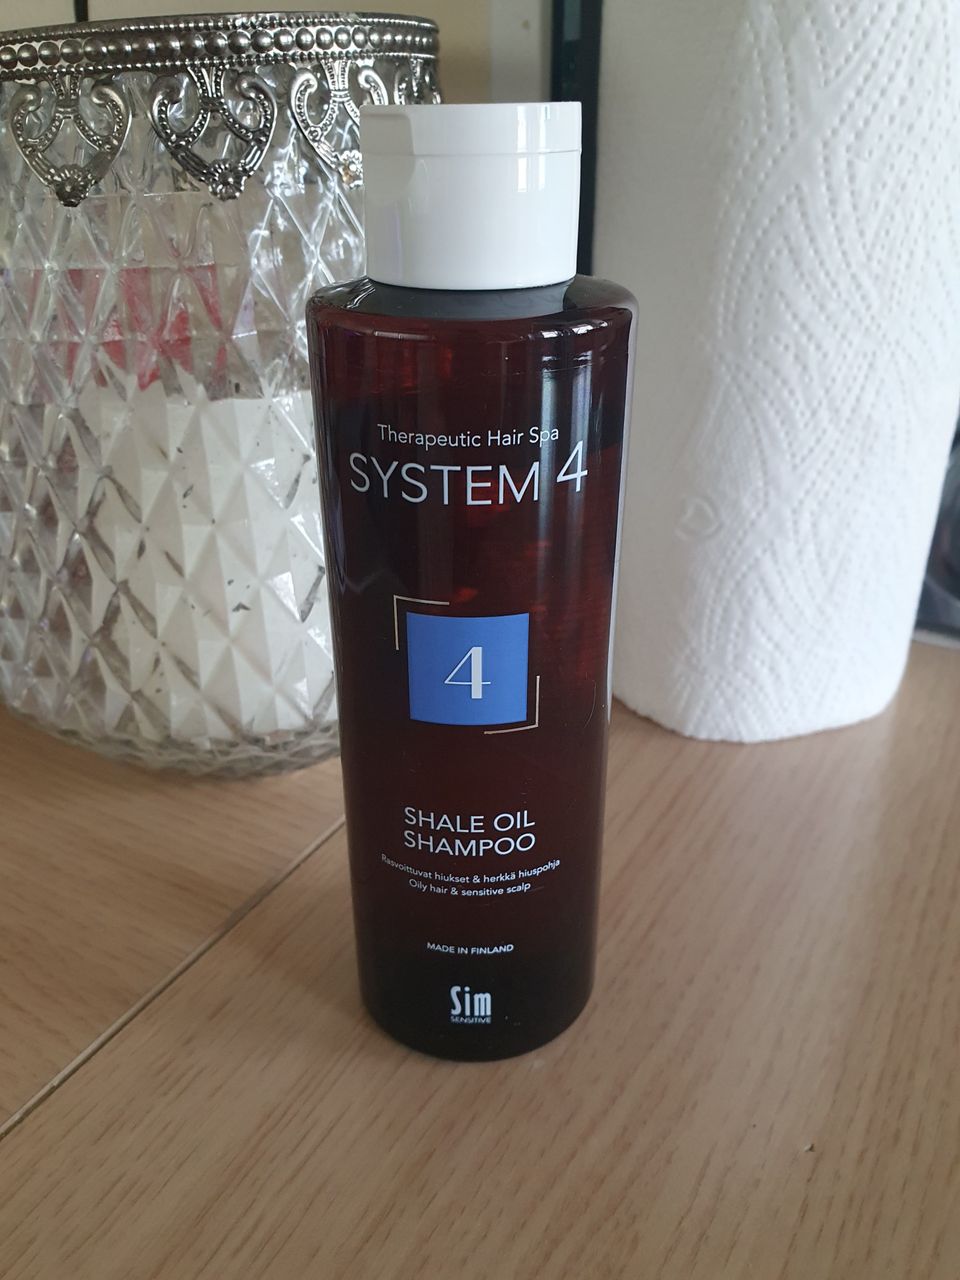 System 4 shale oil shampoo